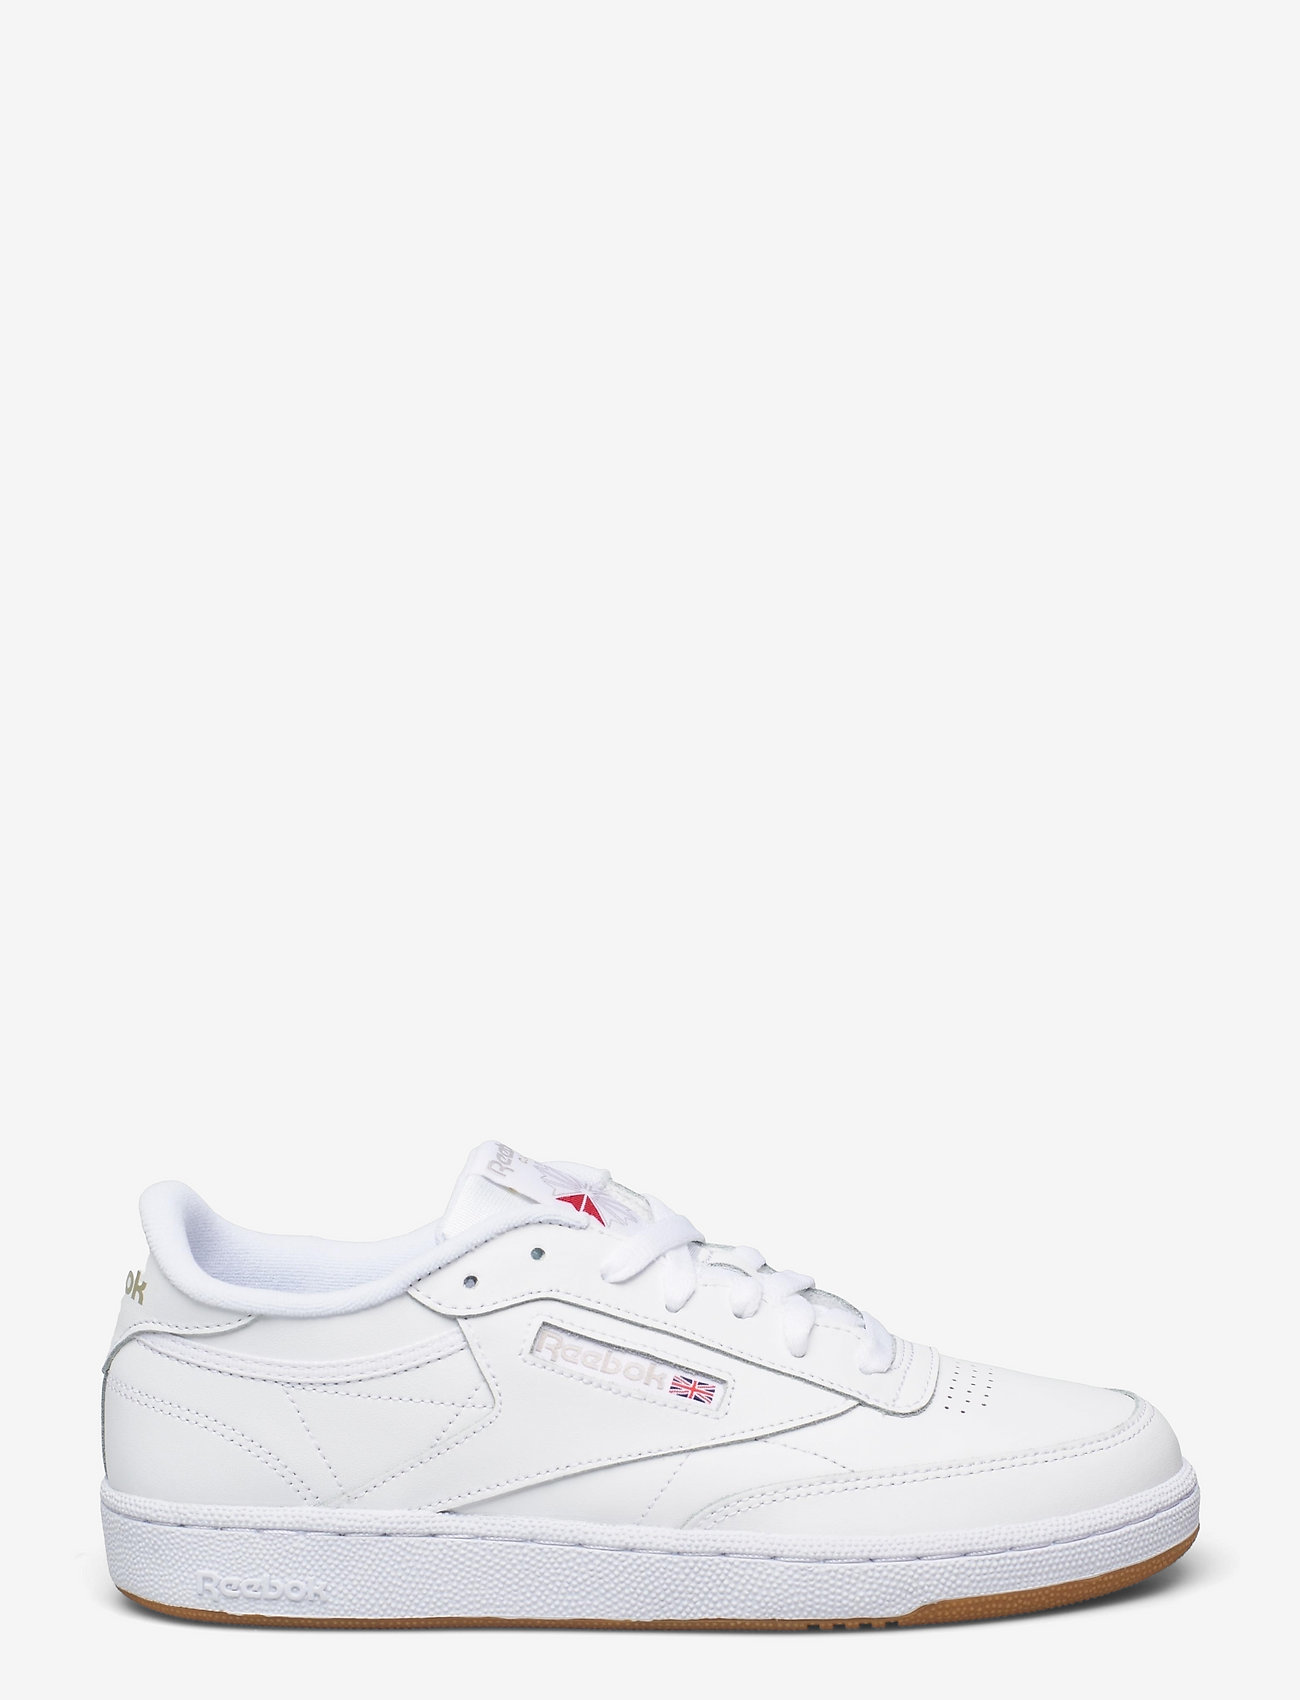 Reebok Classics - CLUB C 85 - low top sneakers - white/light grey/gum - 1